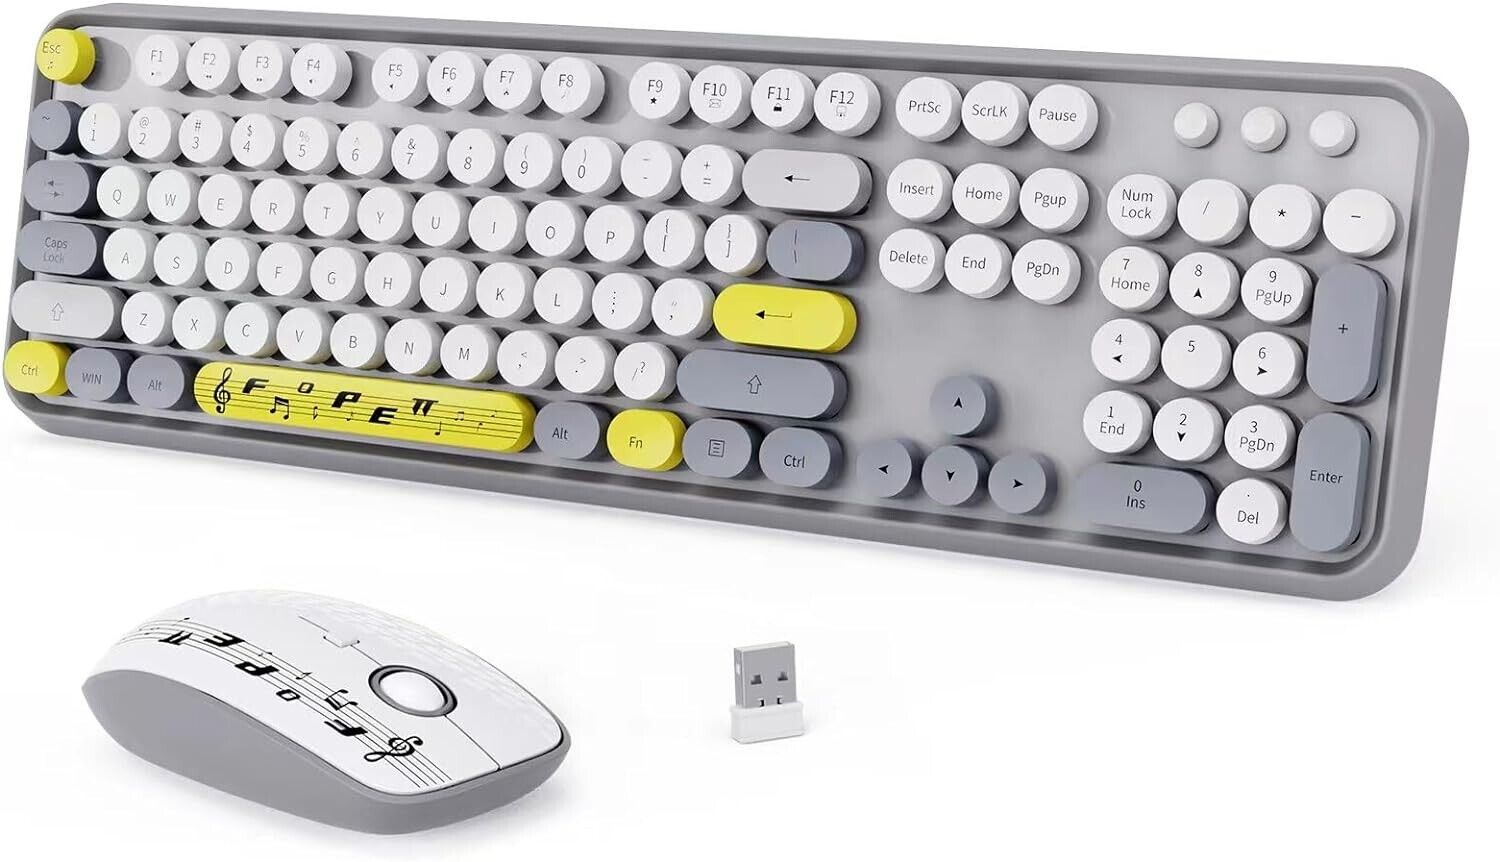 Round Keys & Retro Vibes Wireless Keyboard Mouse Combo - $36.95 (New)Round Key